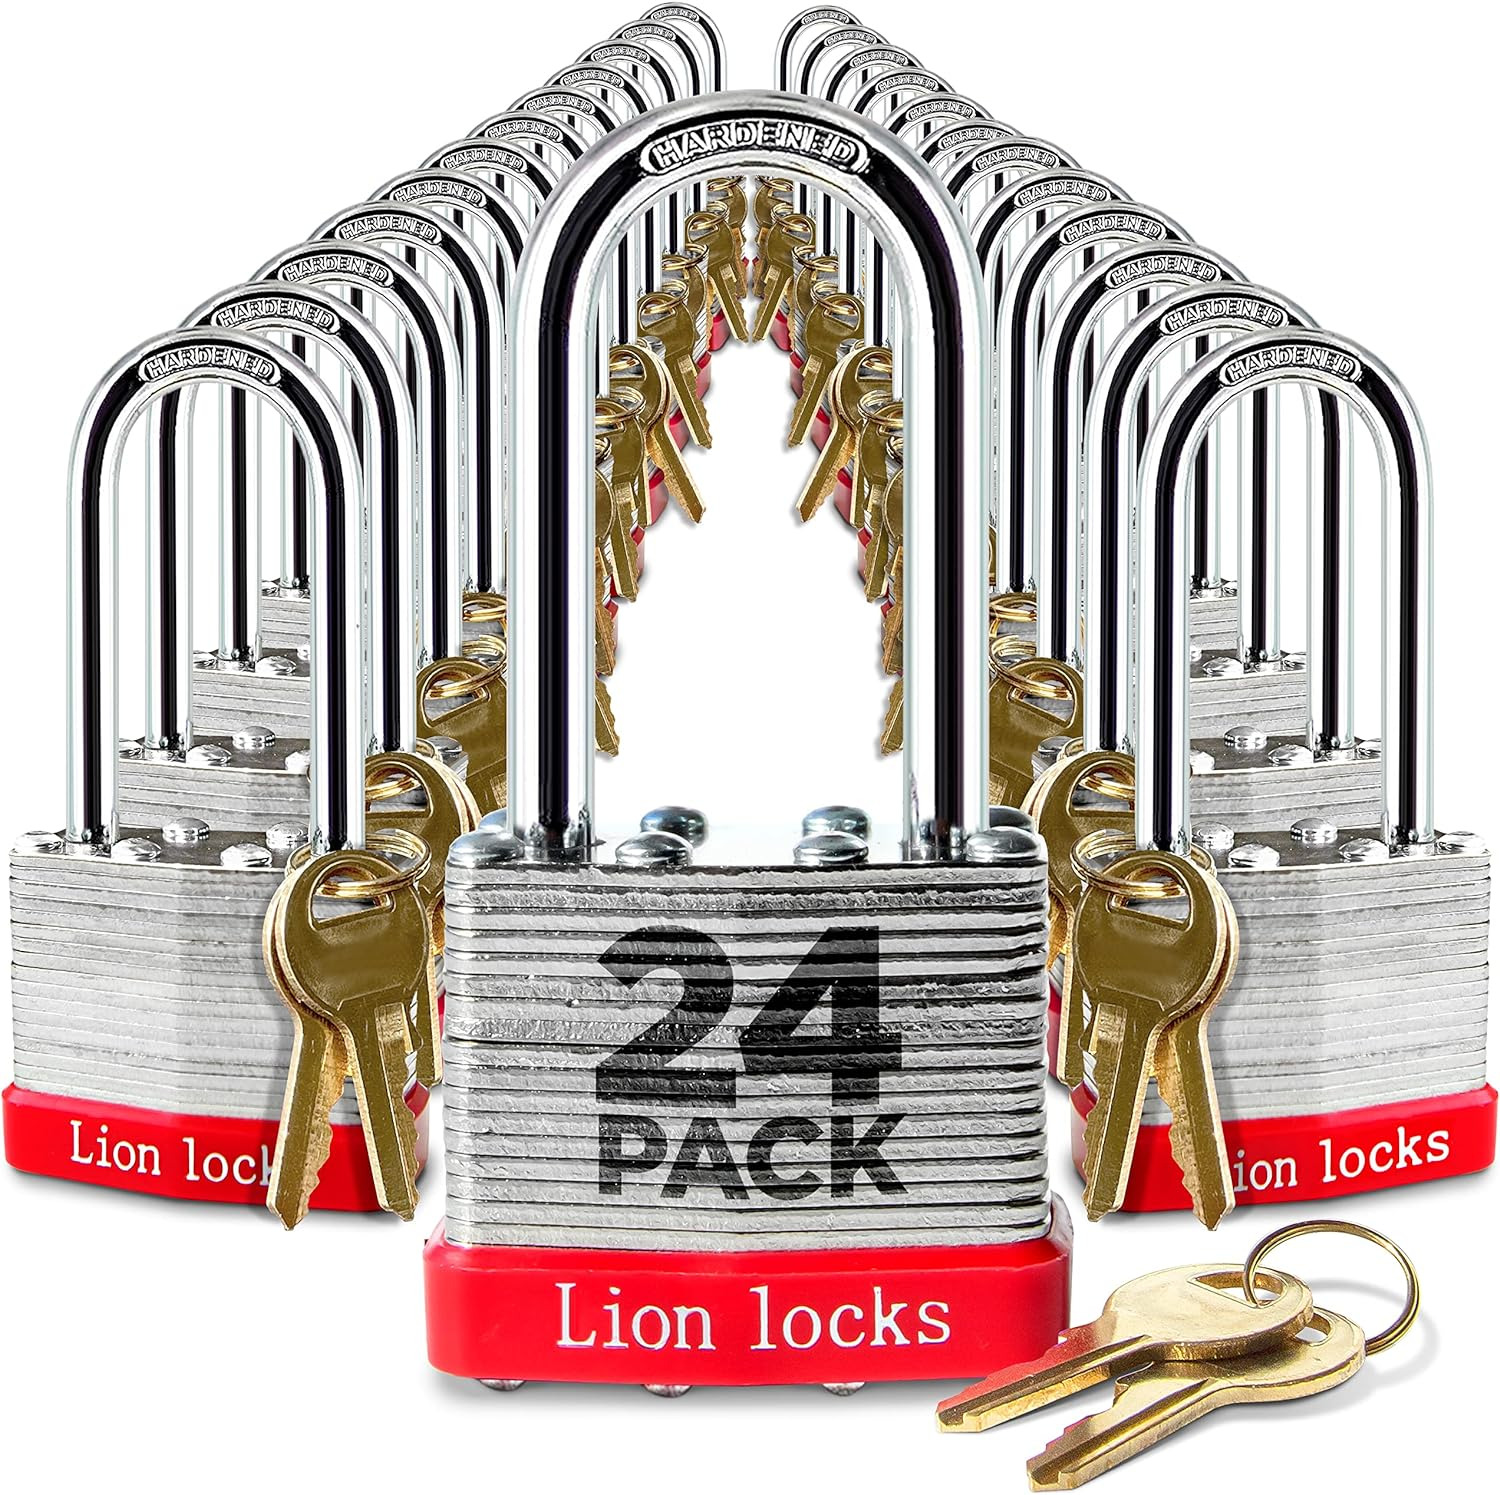 24 Keyed-Alike Padlocks w/ 2” Long Shackle, 48 Keys, Hardened Steel Case